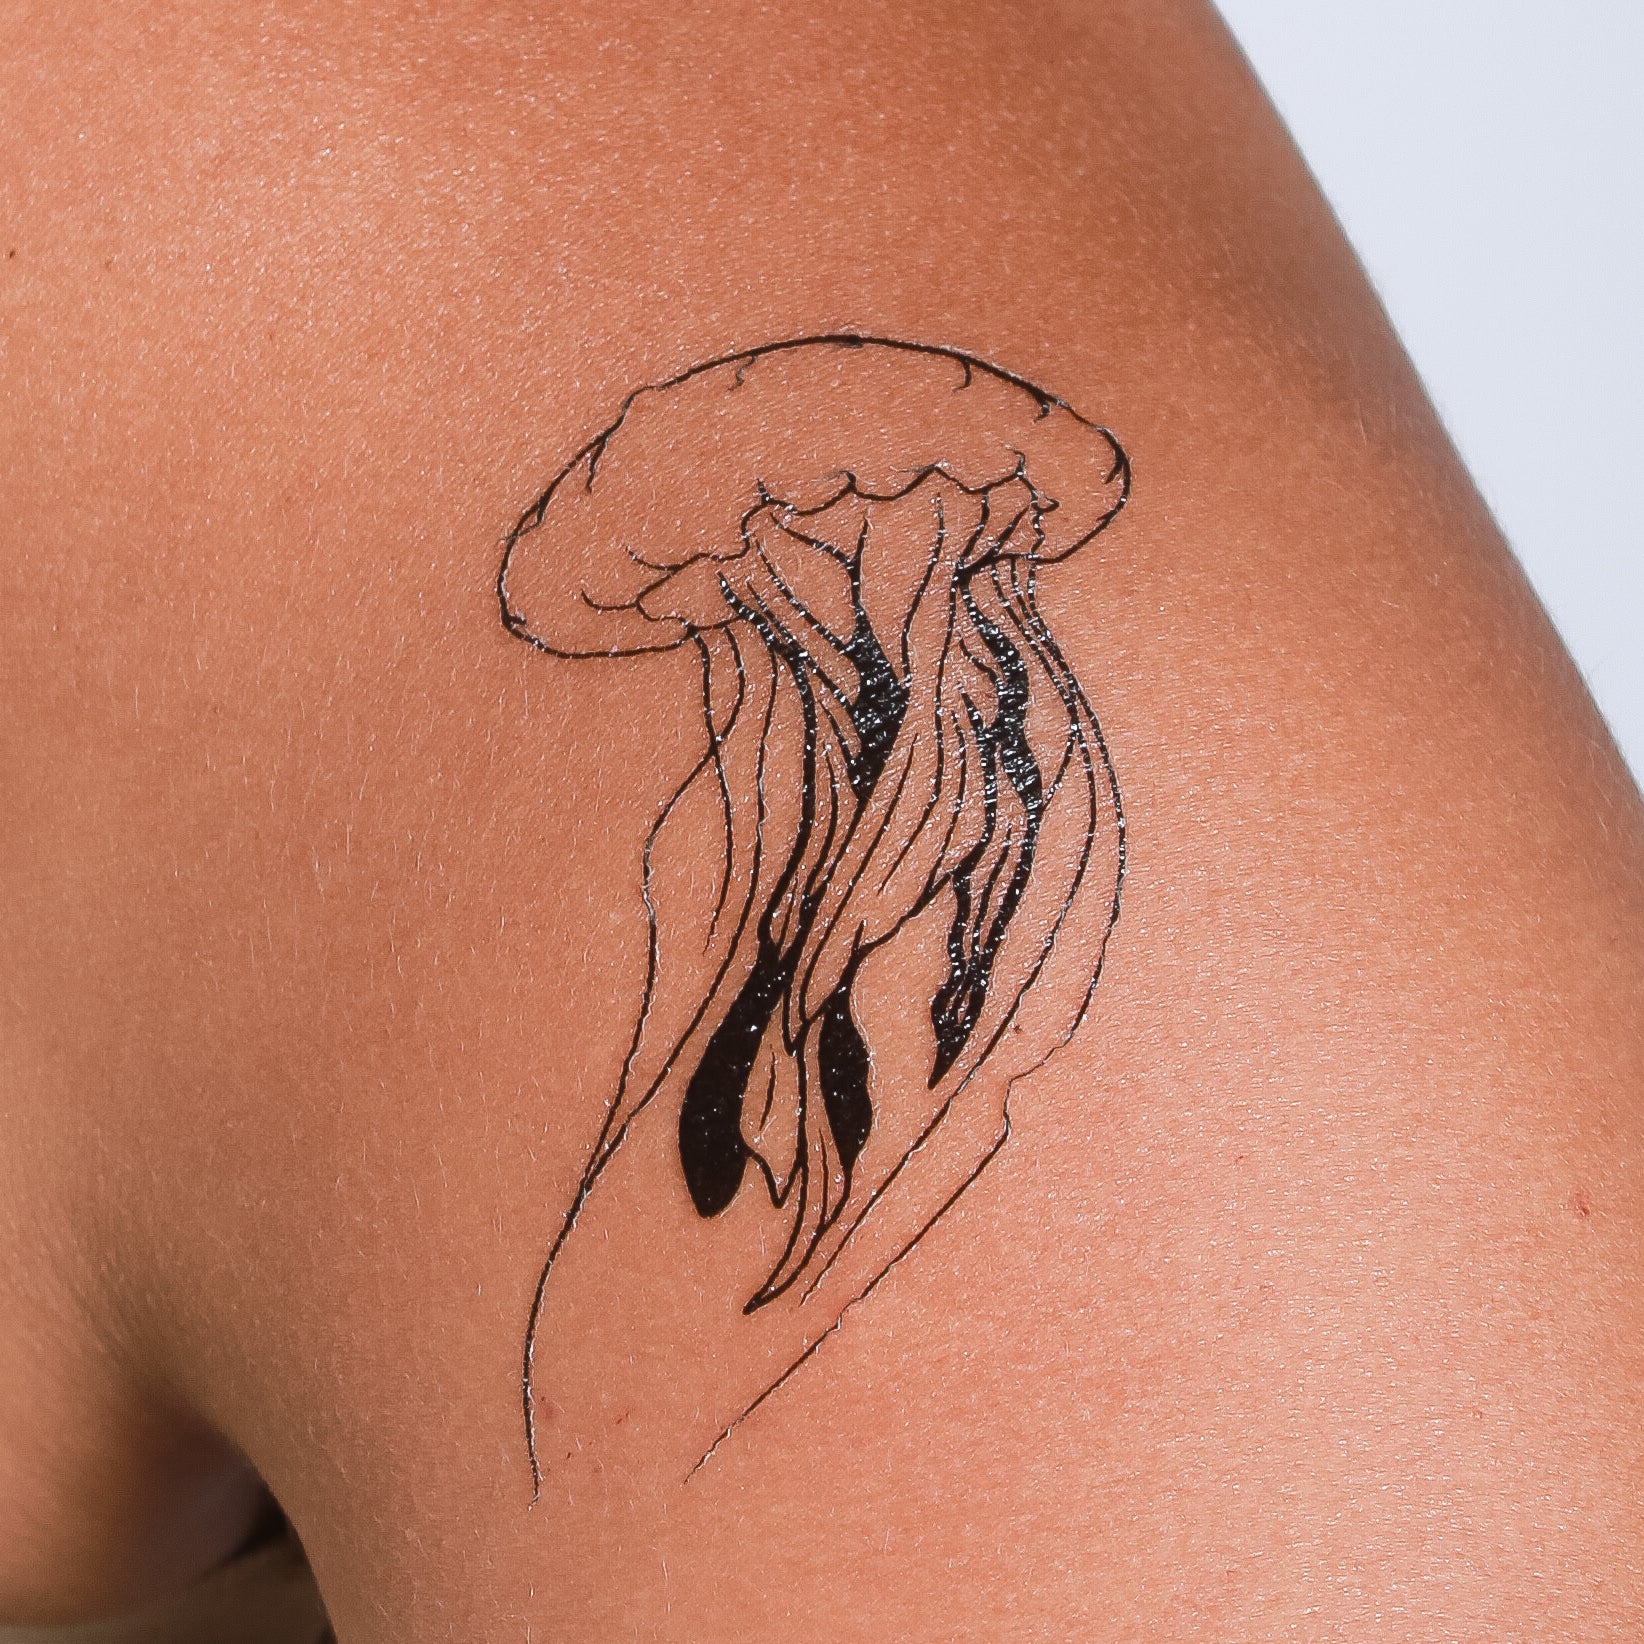 MAR NEGRO - . JELLYFISH . ○ MAR NEGRO ○. #new #nuevo #medusa #jellyfish # jellyfishtattoo #tattoo #tattoos #tatuaje #tatuajes #tatuador #tatuadores  #tatuadorescolombianos #bogota #tatuadoresbogotanos #colombia #singleneedle  #tatuajemedusa | Facebook